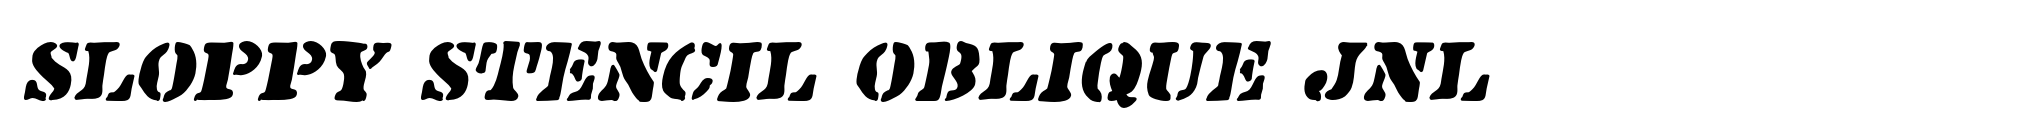 Sloppy Stencil Oblique JNL image